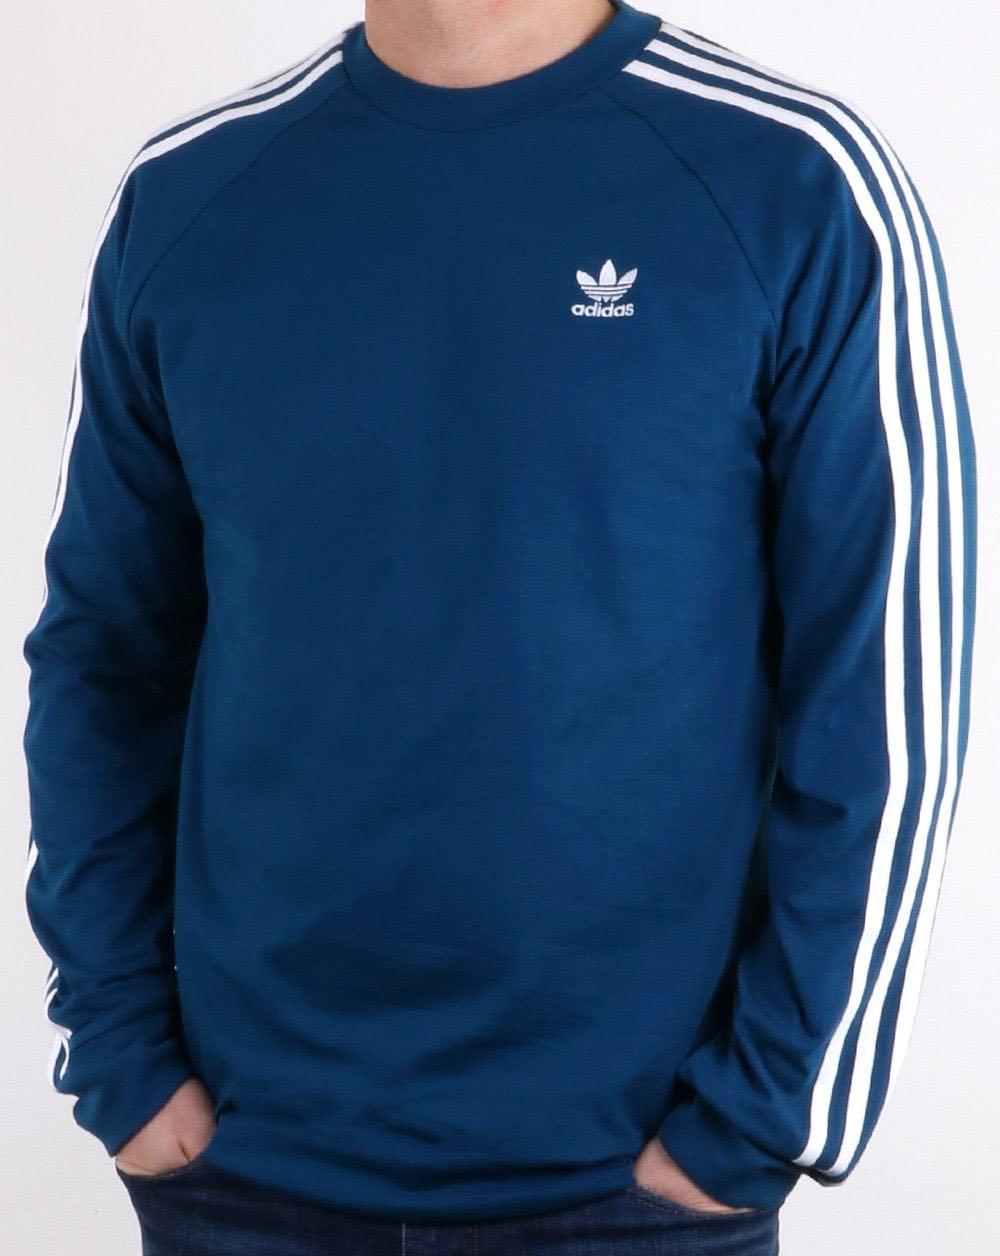 Adidas Sweatshirt, Men's Fashion 